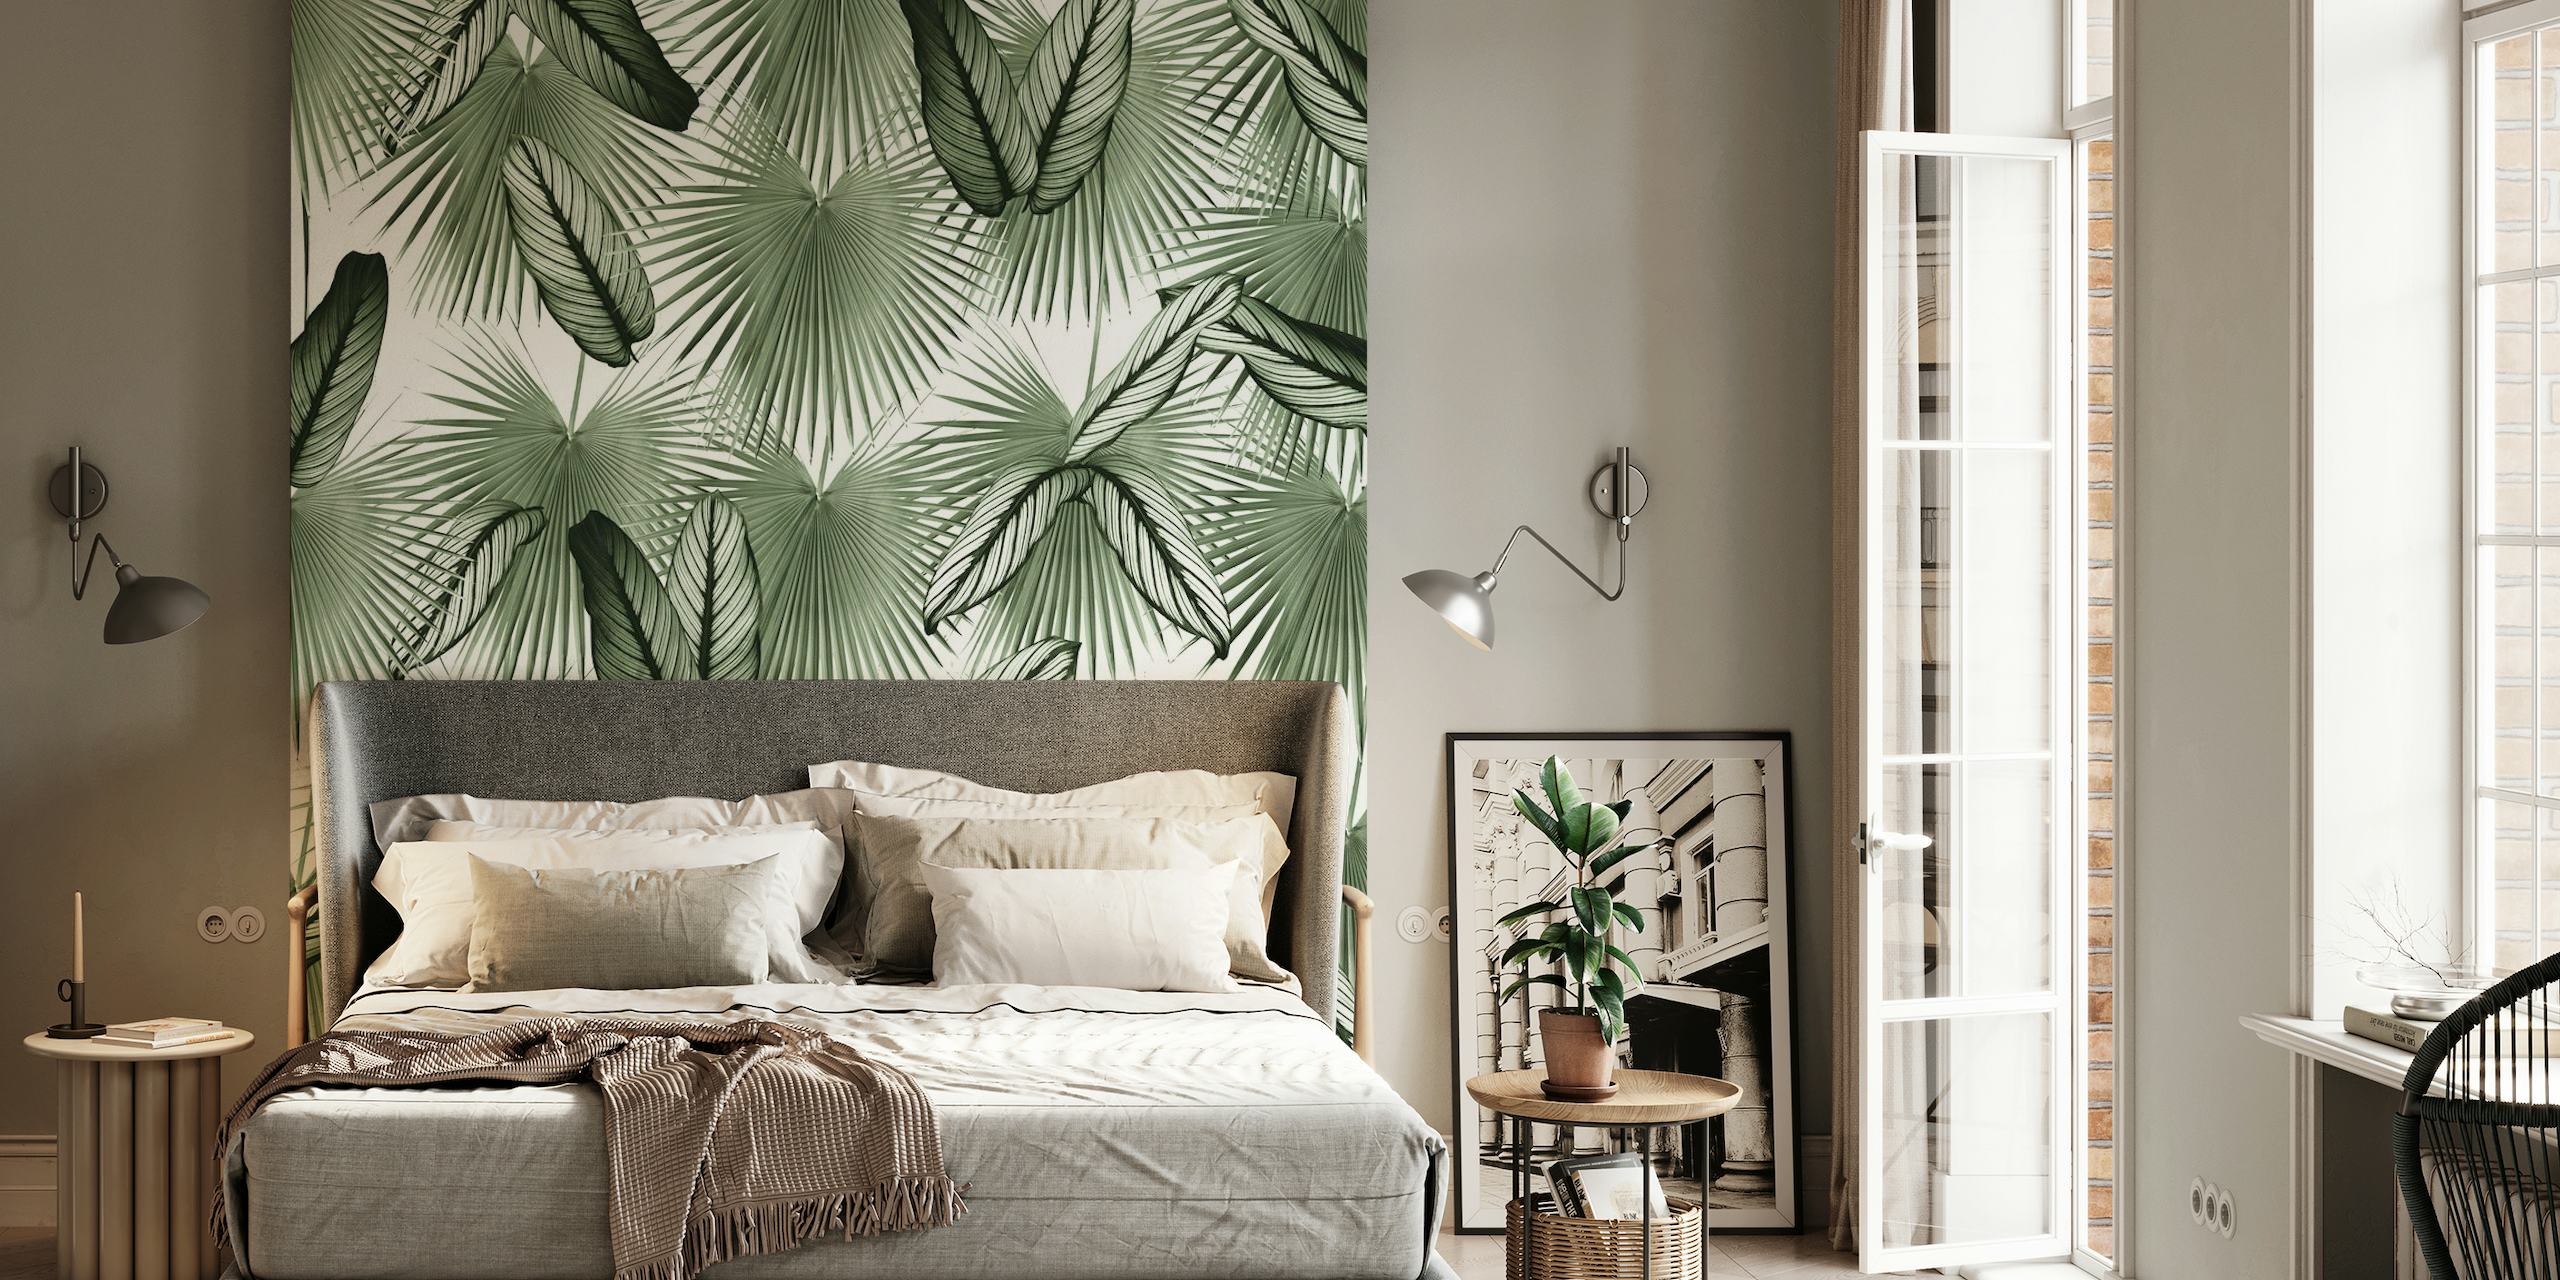 Calathea Fan Palm Leaves muurschildering met gedetailleerd tropisch gebladerte in monochrome groentinten.